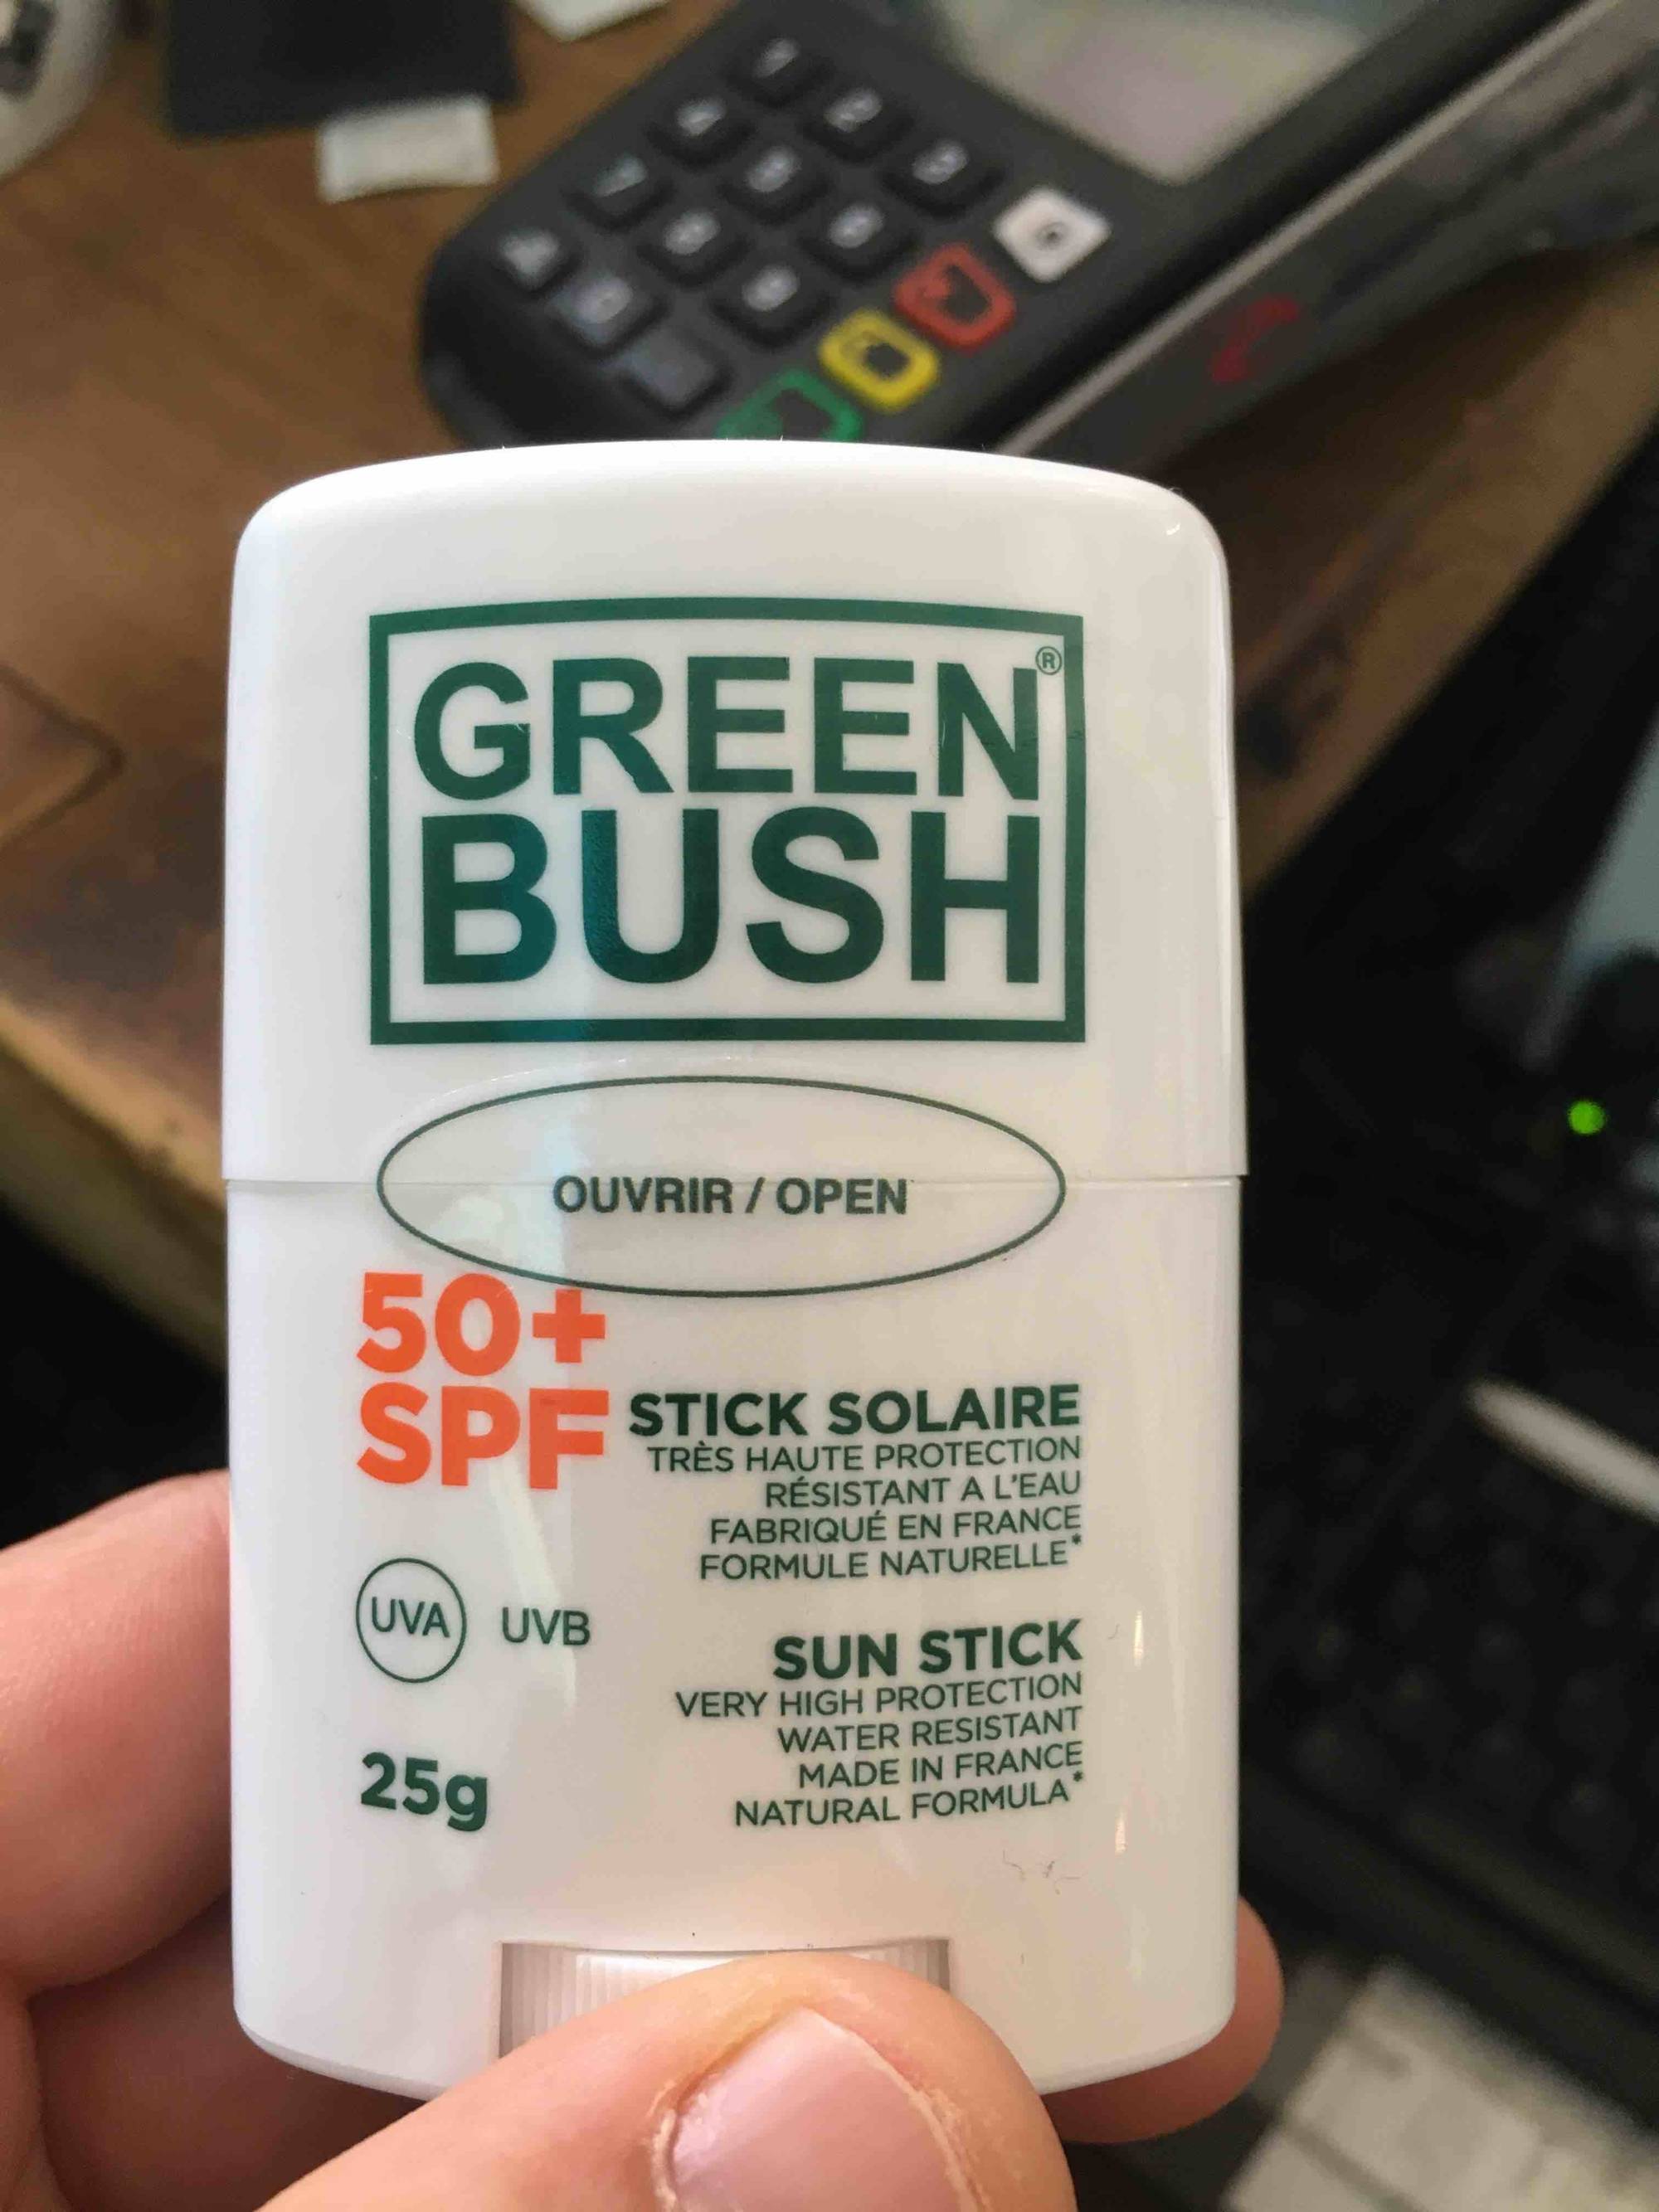 GREEN BUSH - Stick solaire très haute protection SPF 50+